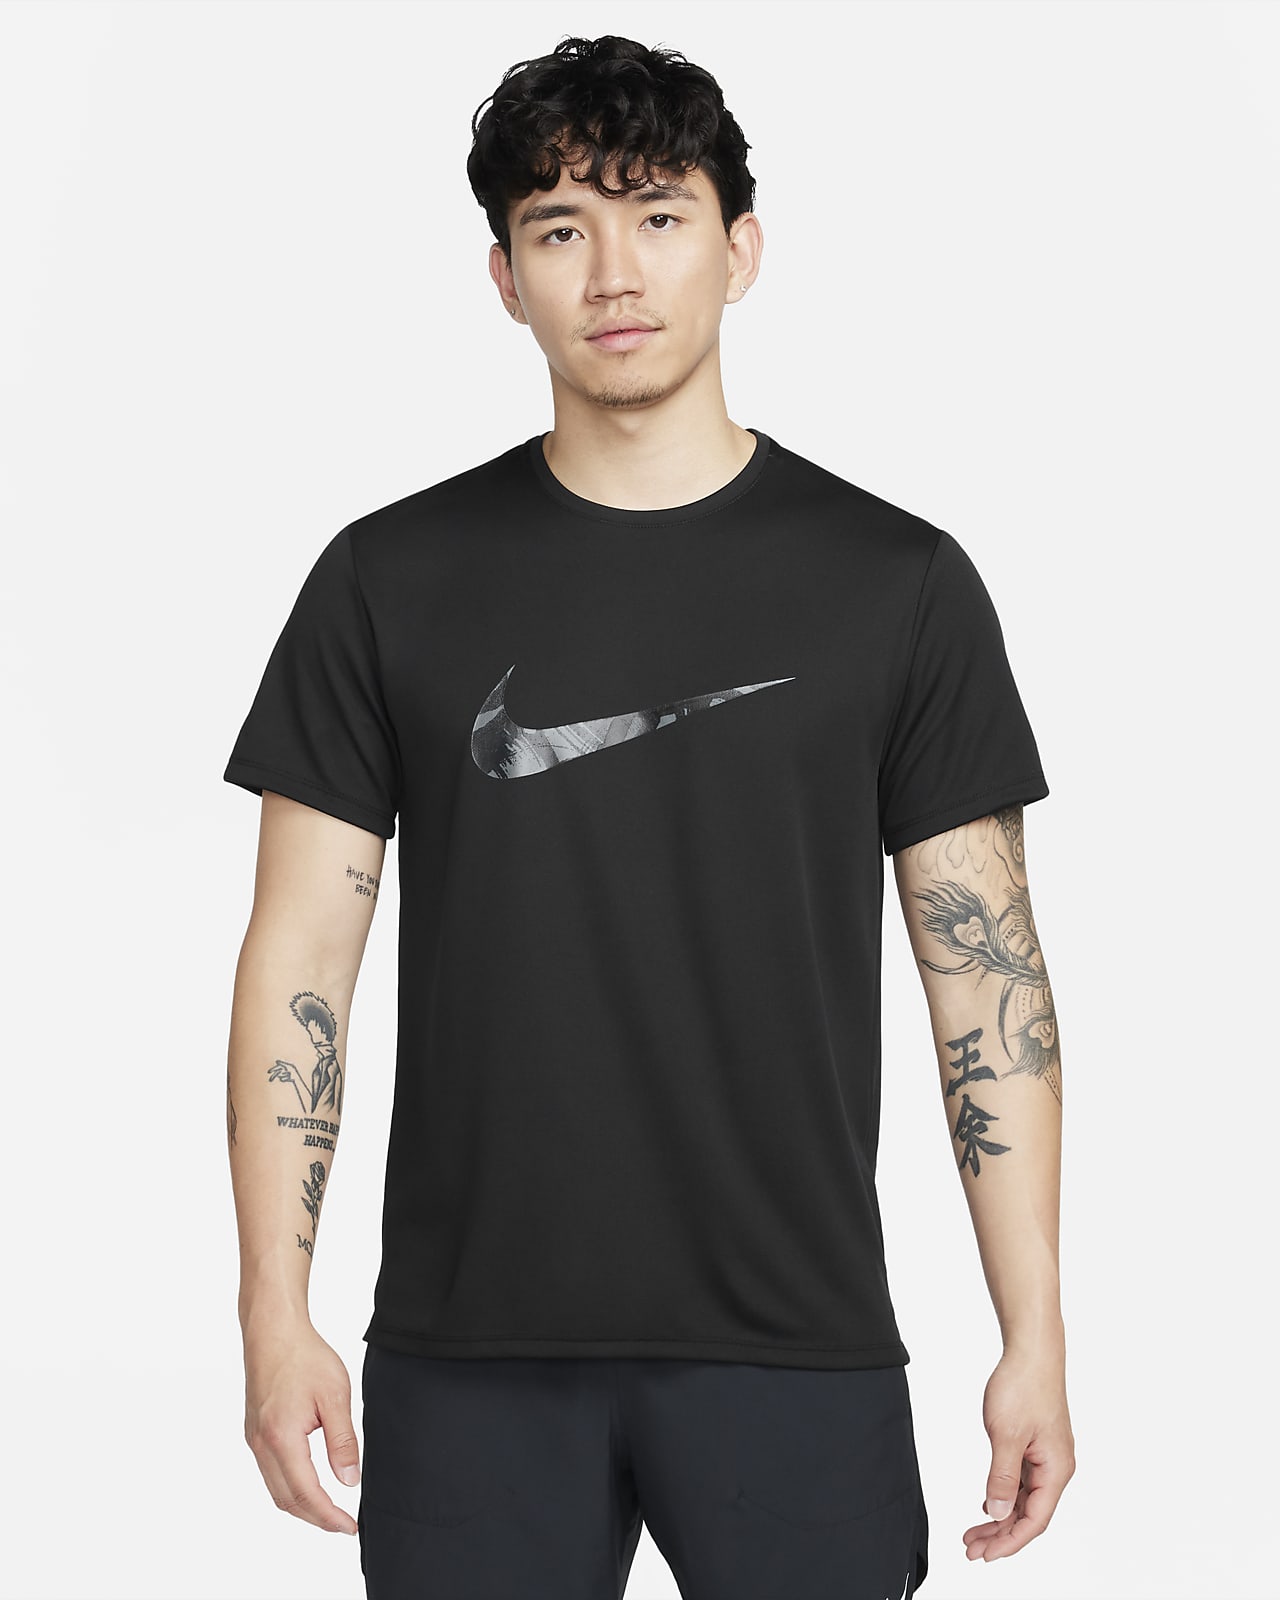 Men's Miler Running Tops & T-Shirts. Nike IL